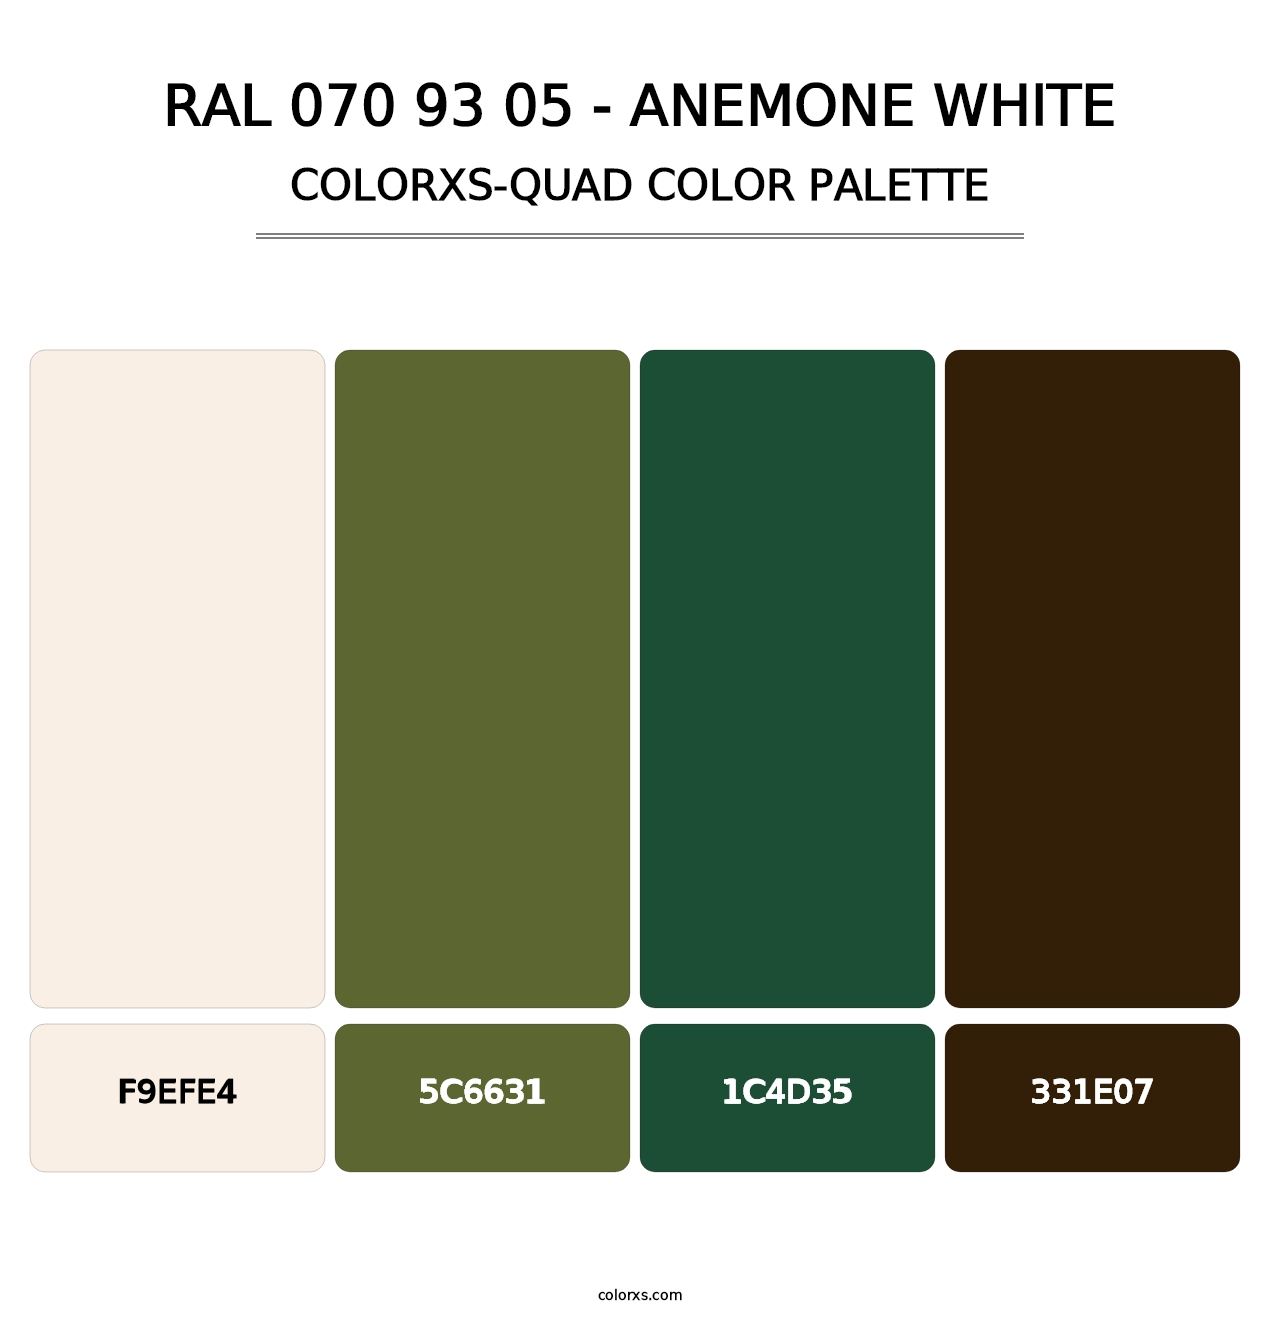 RAL 070 93 05 - Anemone White - Colorxs Quad Palette